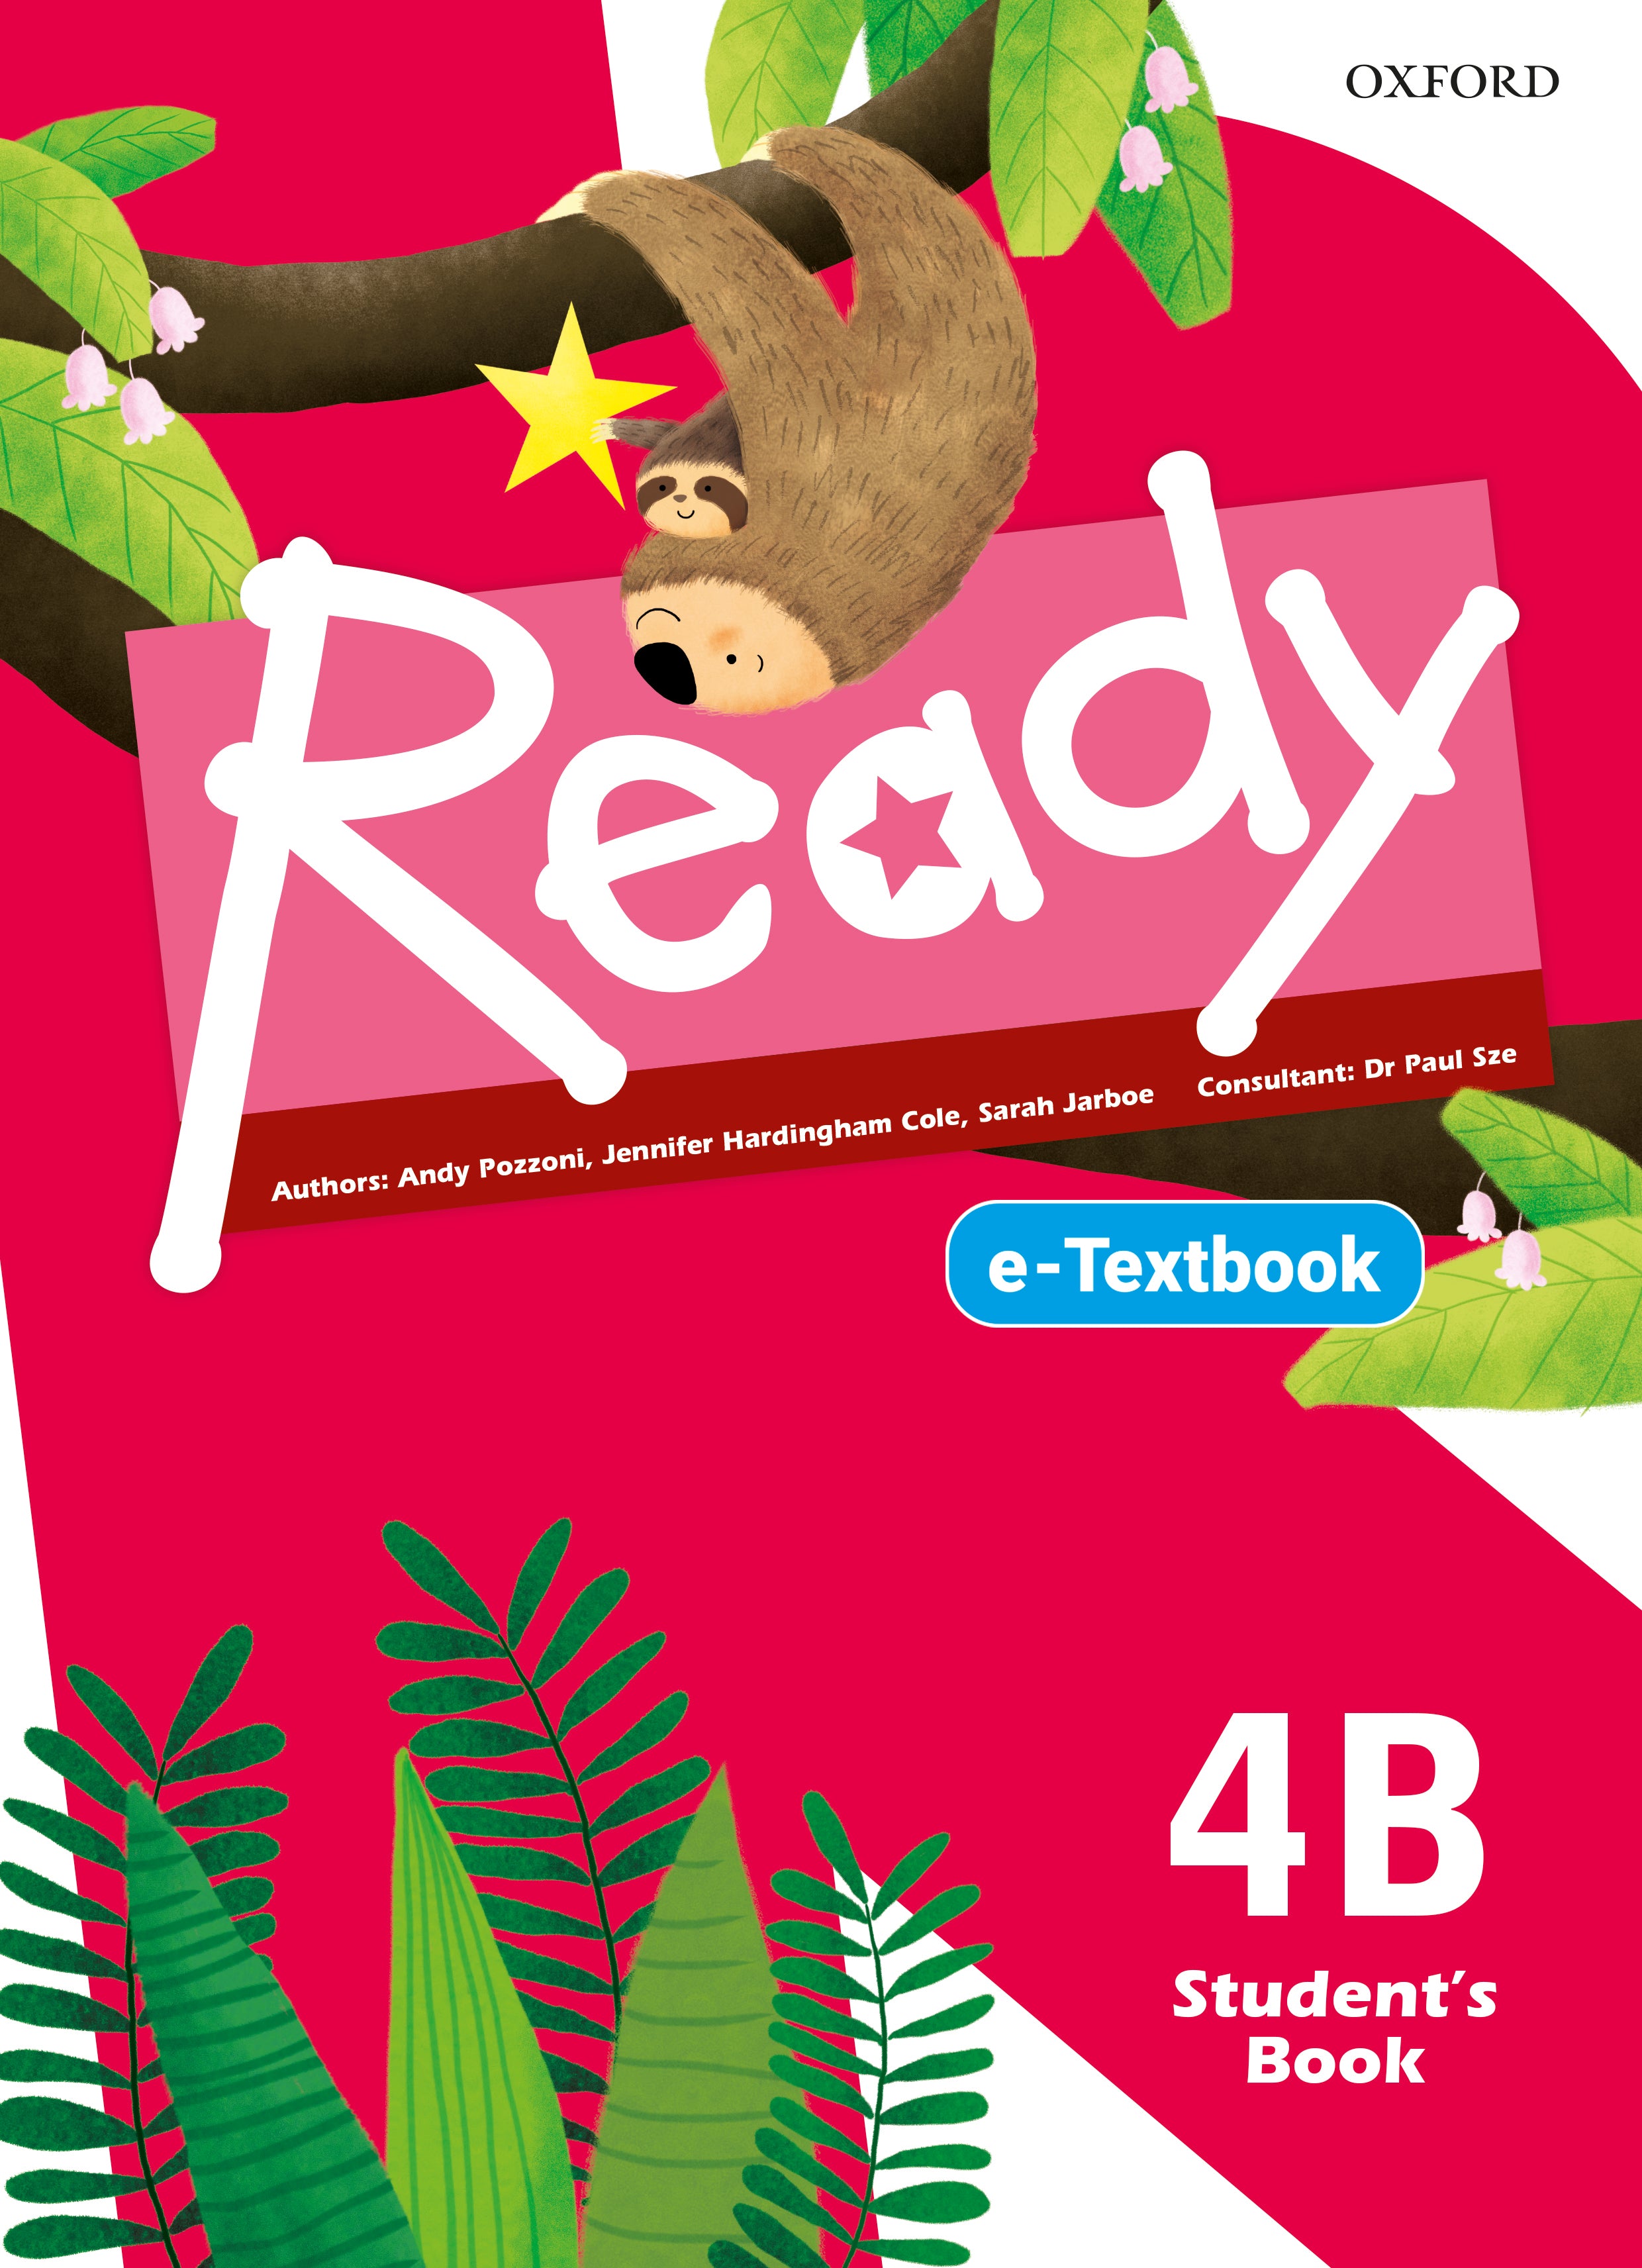 Ready Student's e-Textbook 4B - 牛津大學出版社網上商店